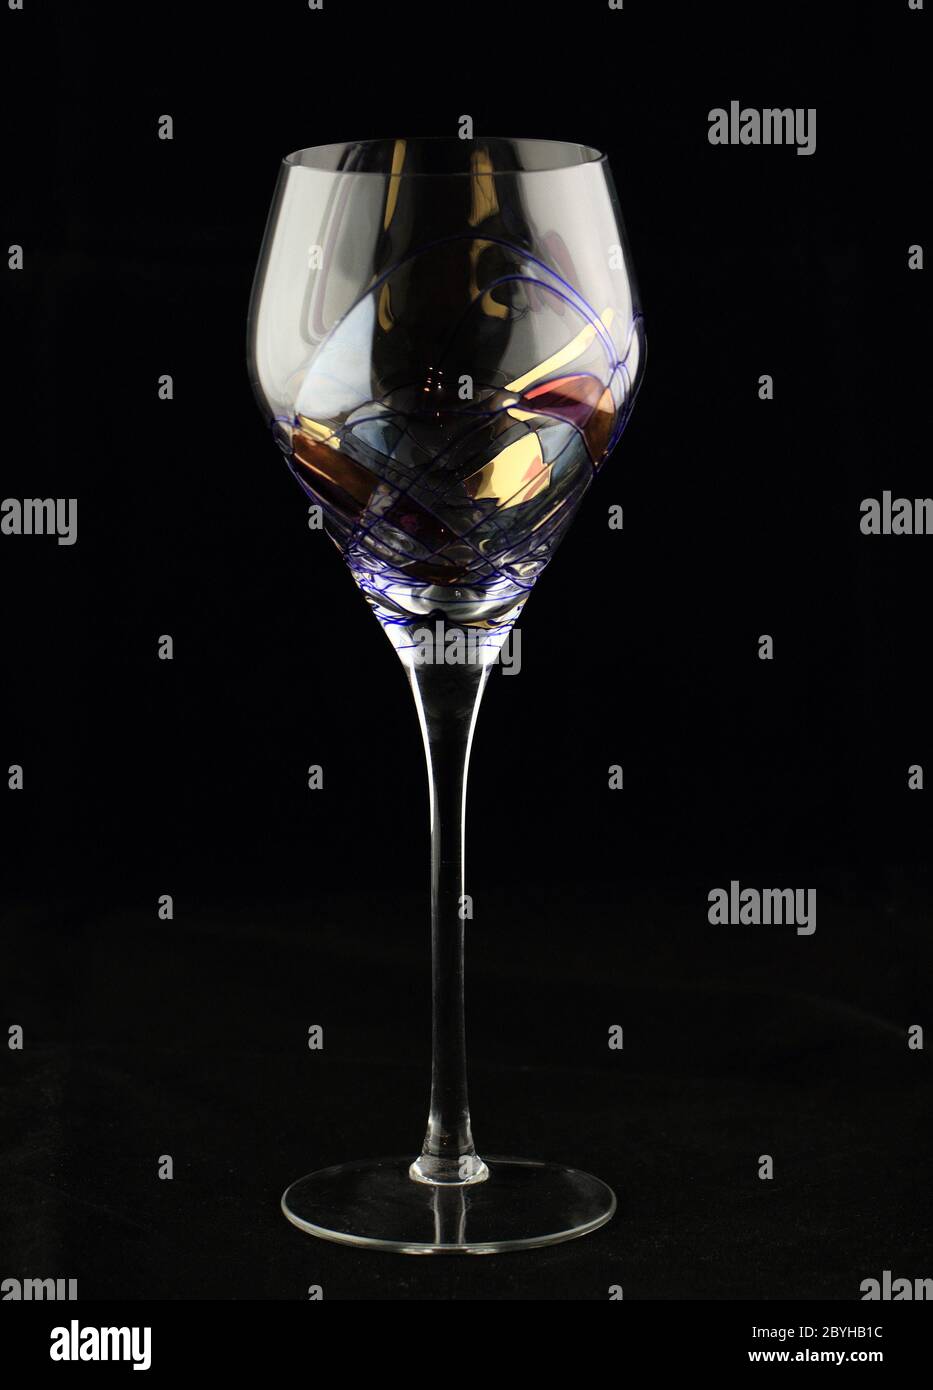 https://c8.alamy.com/comp/2BYHB1C/empty-wine-glass-on-dark-background-2BYHB1C.jpg